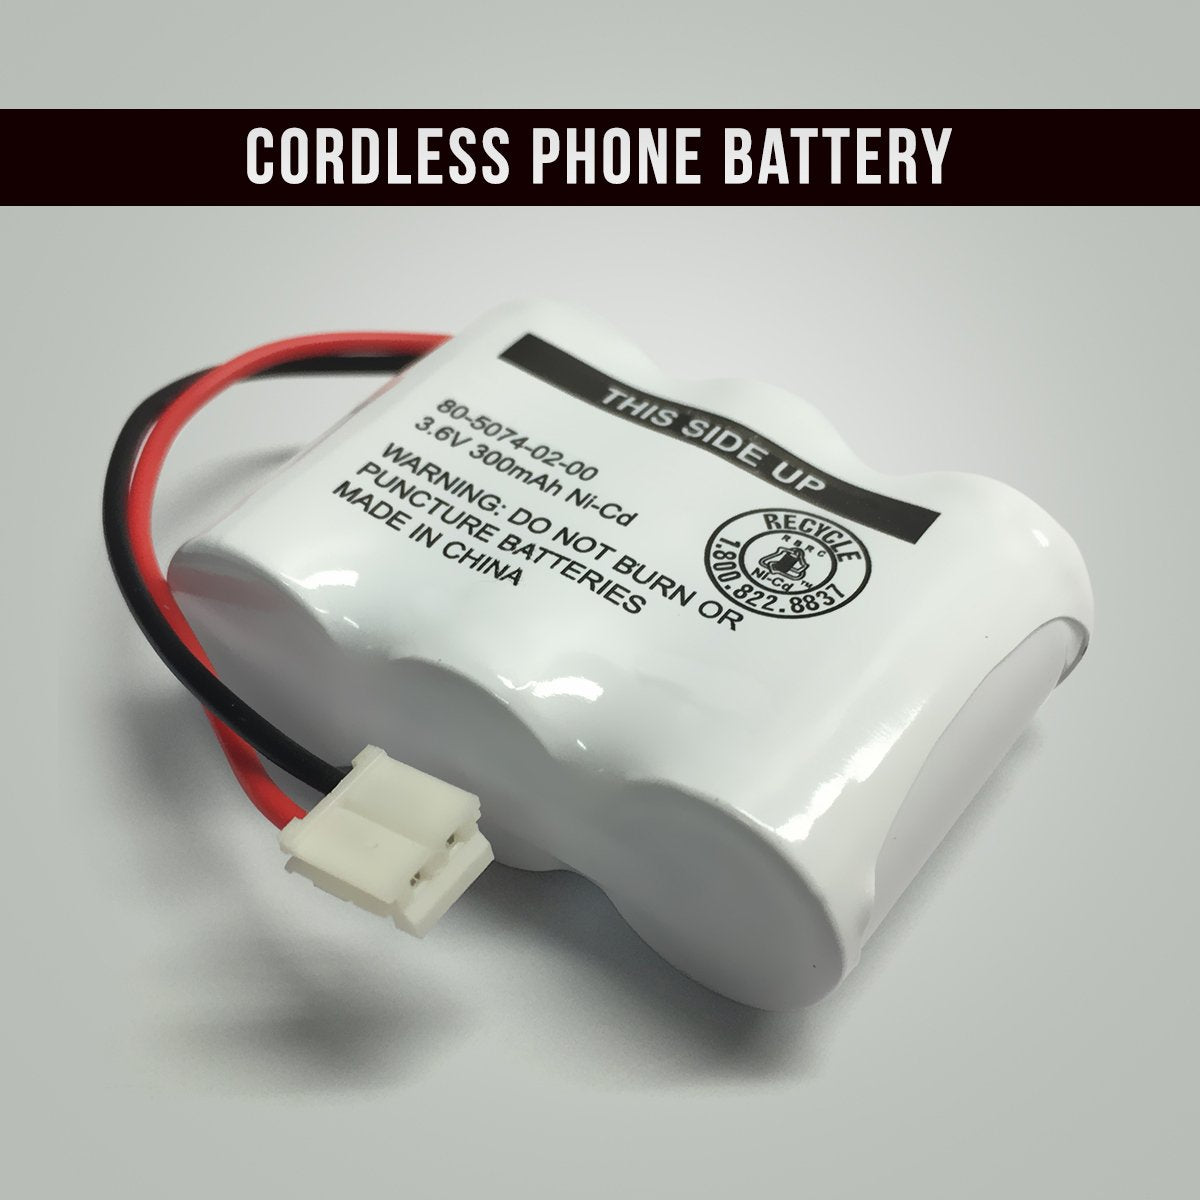 Sharp CL-355 Cordless Phone Battery